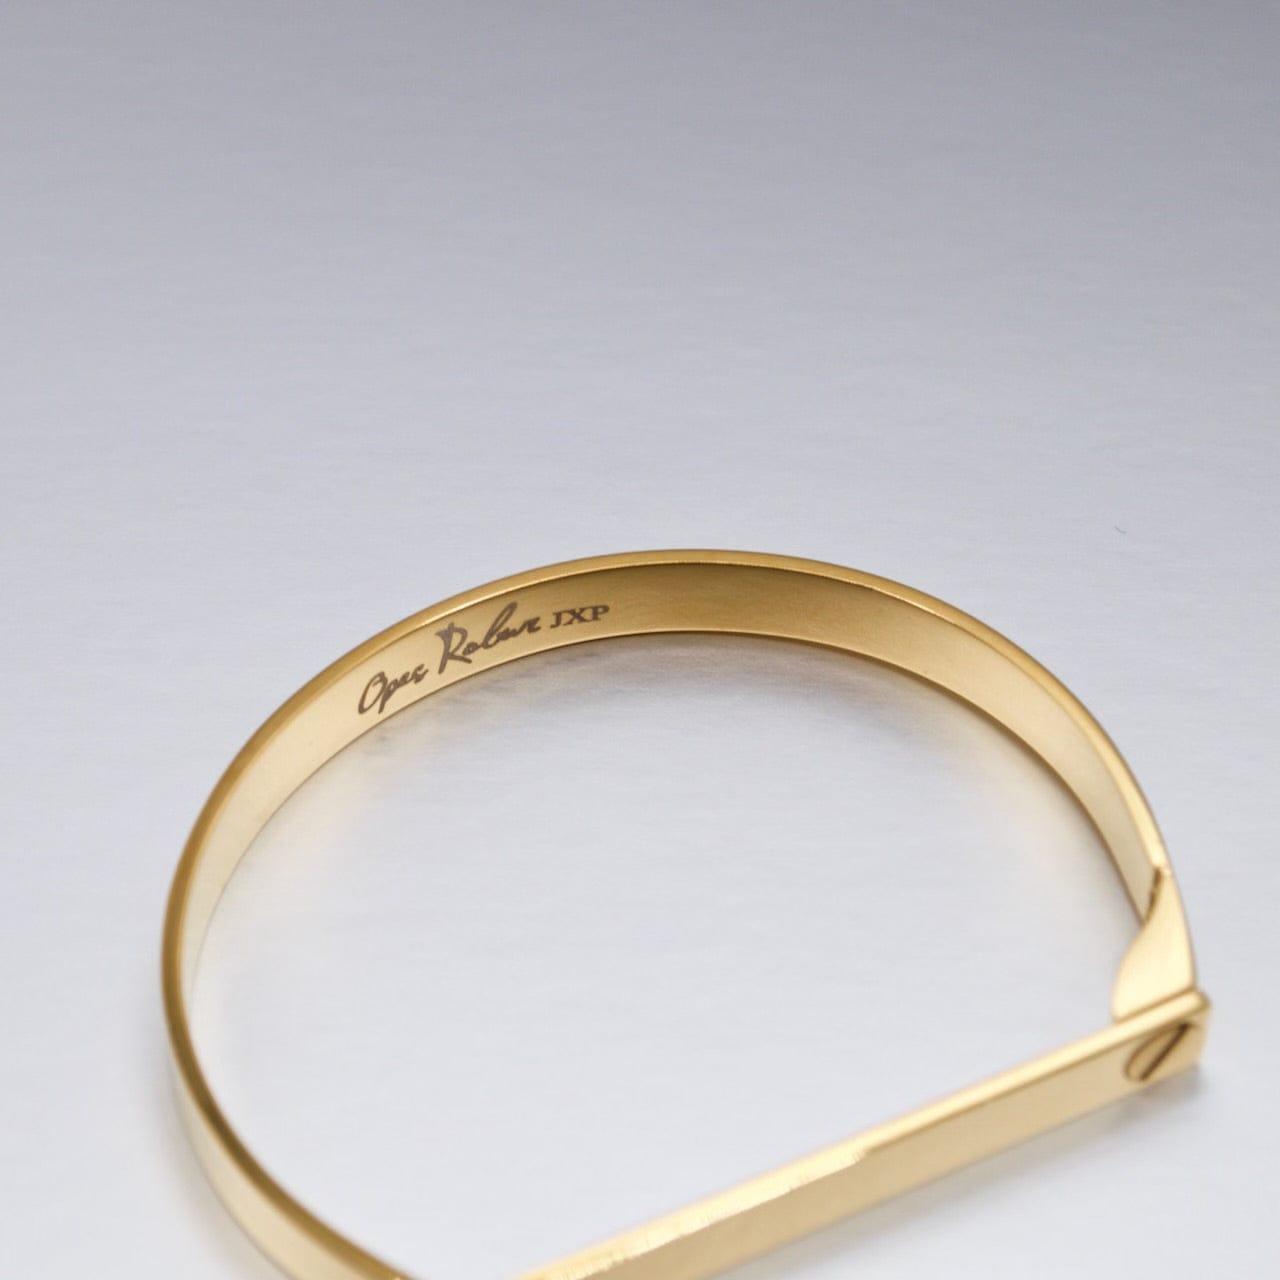 Opes Robur bracelet Copy of LOVE BRACELET